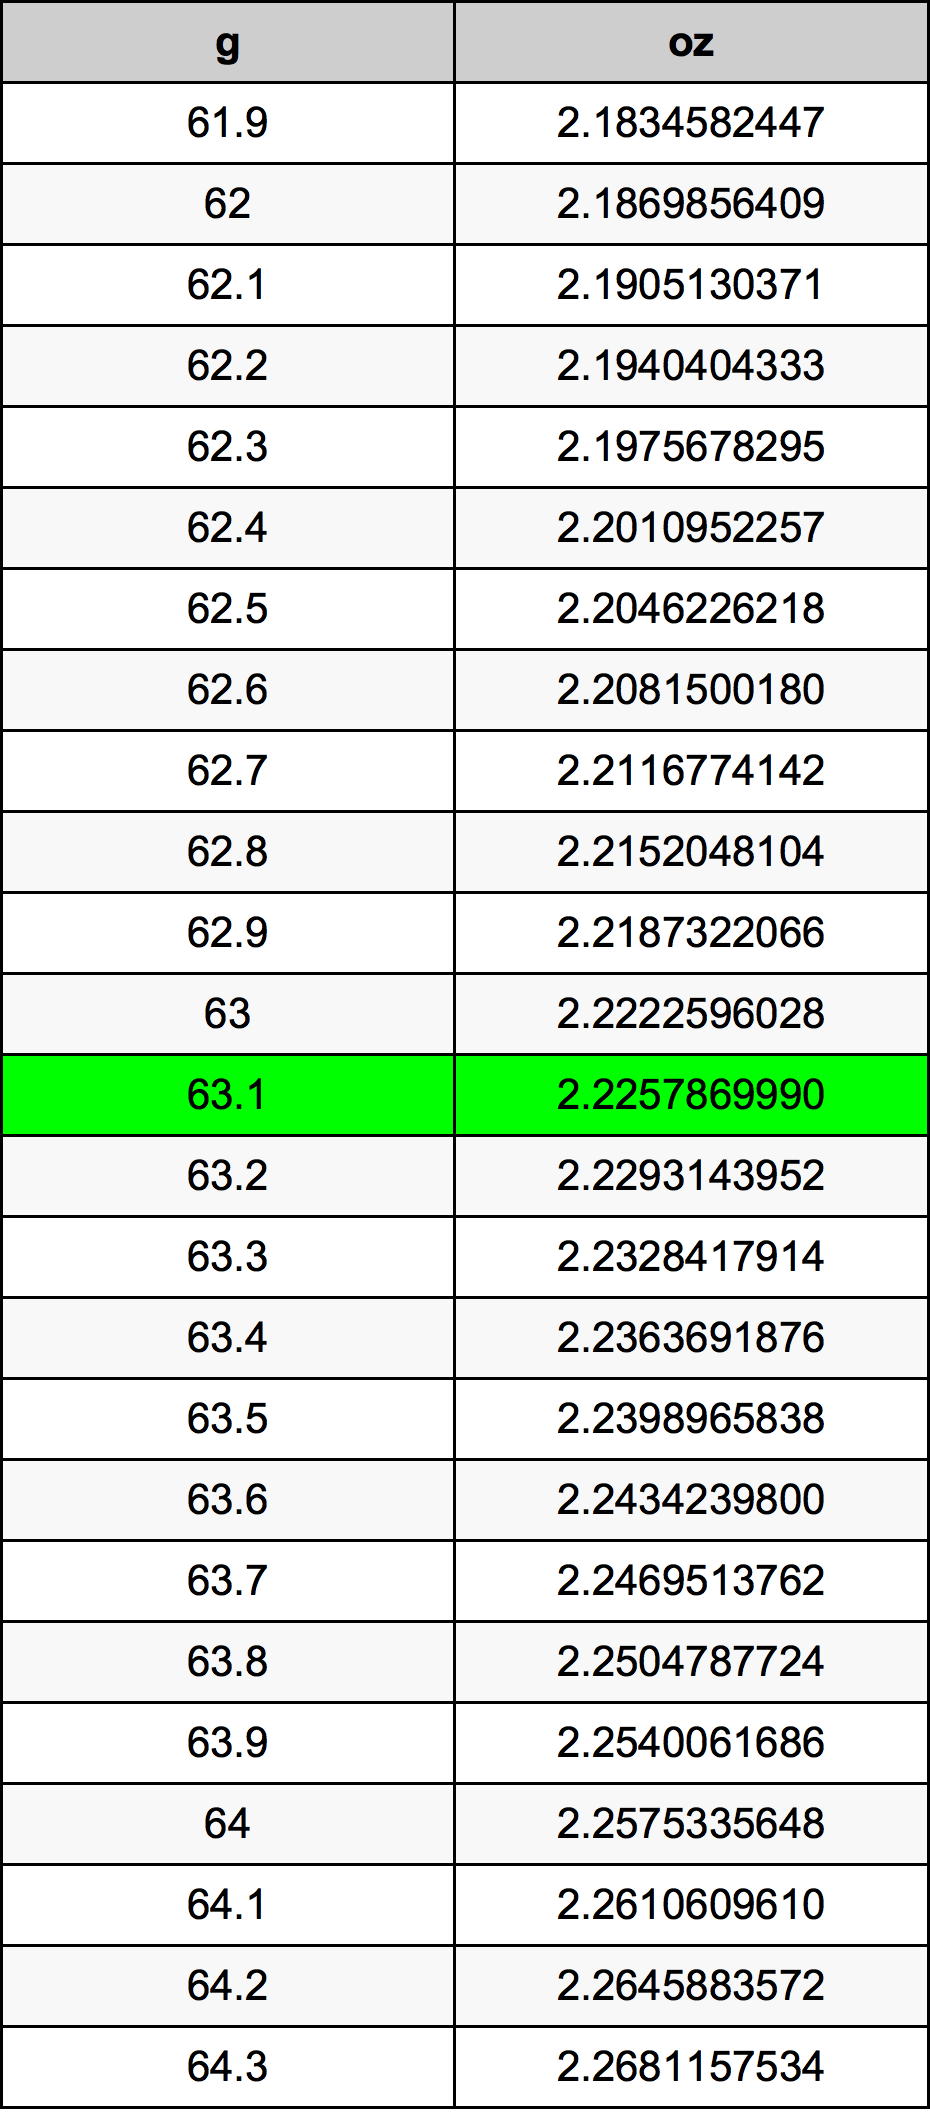 63.1 غرام جدول تحويل